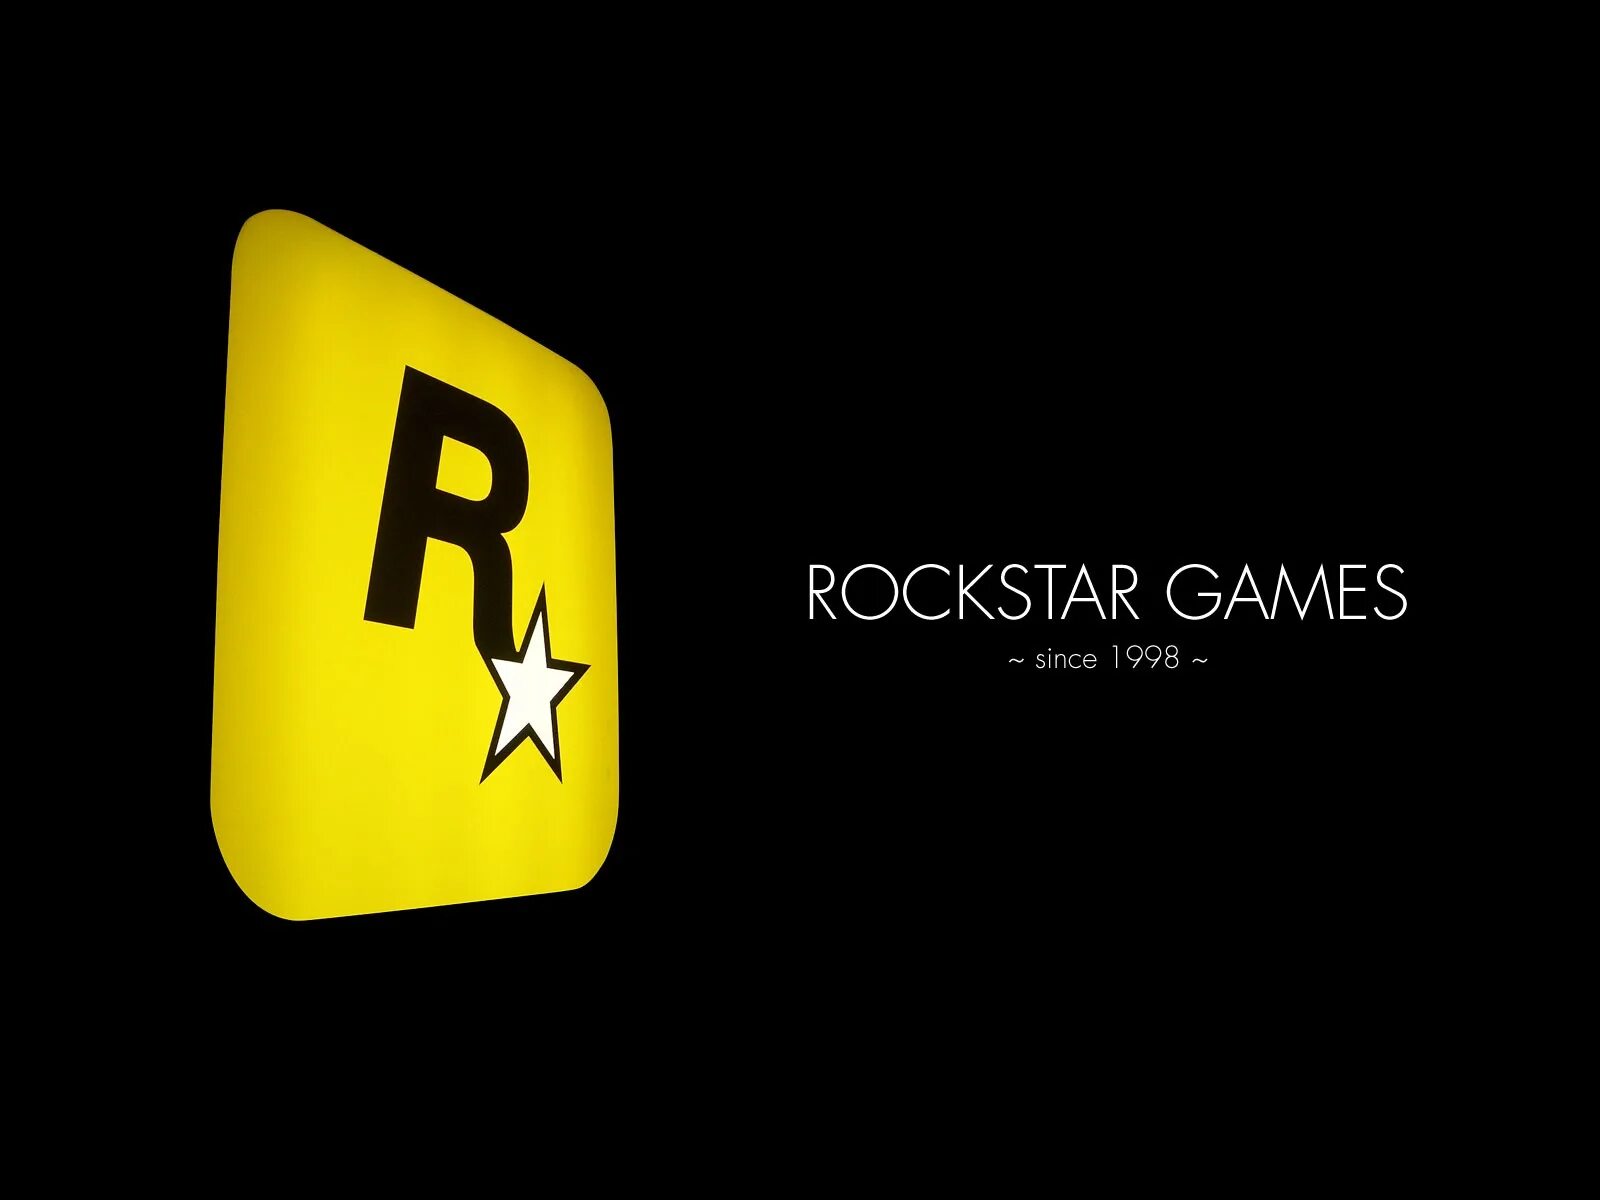 Rockstar games. Логотип рокстар. Rooster game. Игры Rockstar. Rockstar games файлы